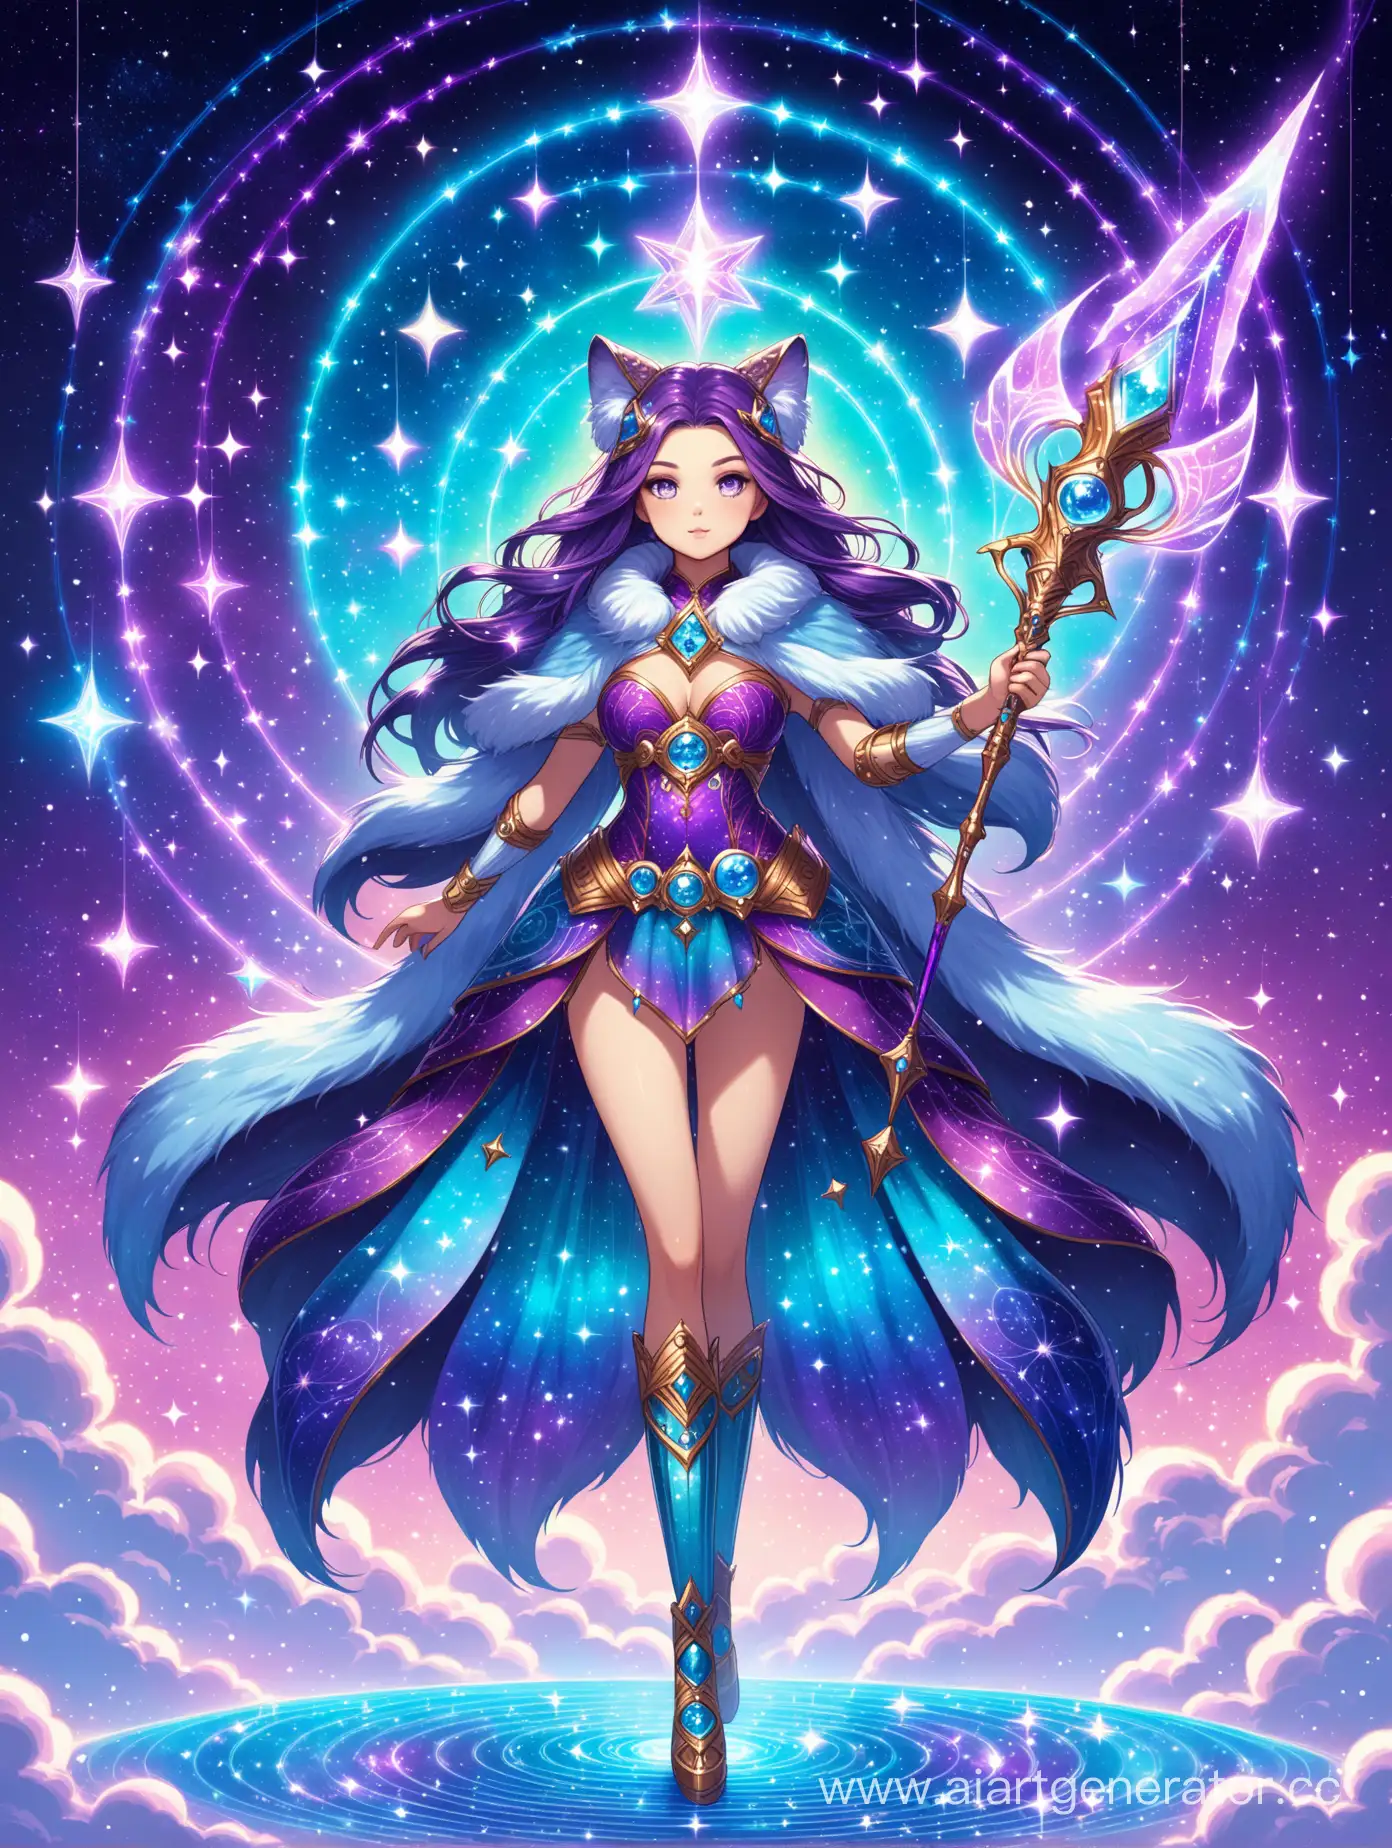 Cosmic-Magic-Girl-in-Fantasy-Attire-with-Ornate-Weapon